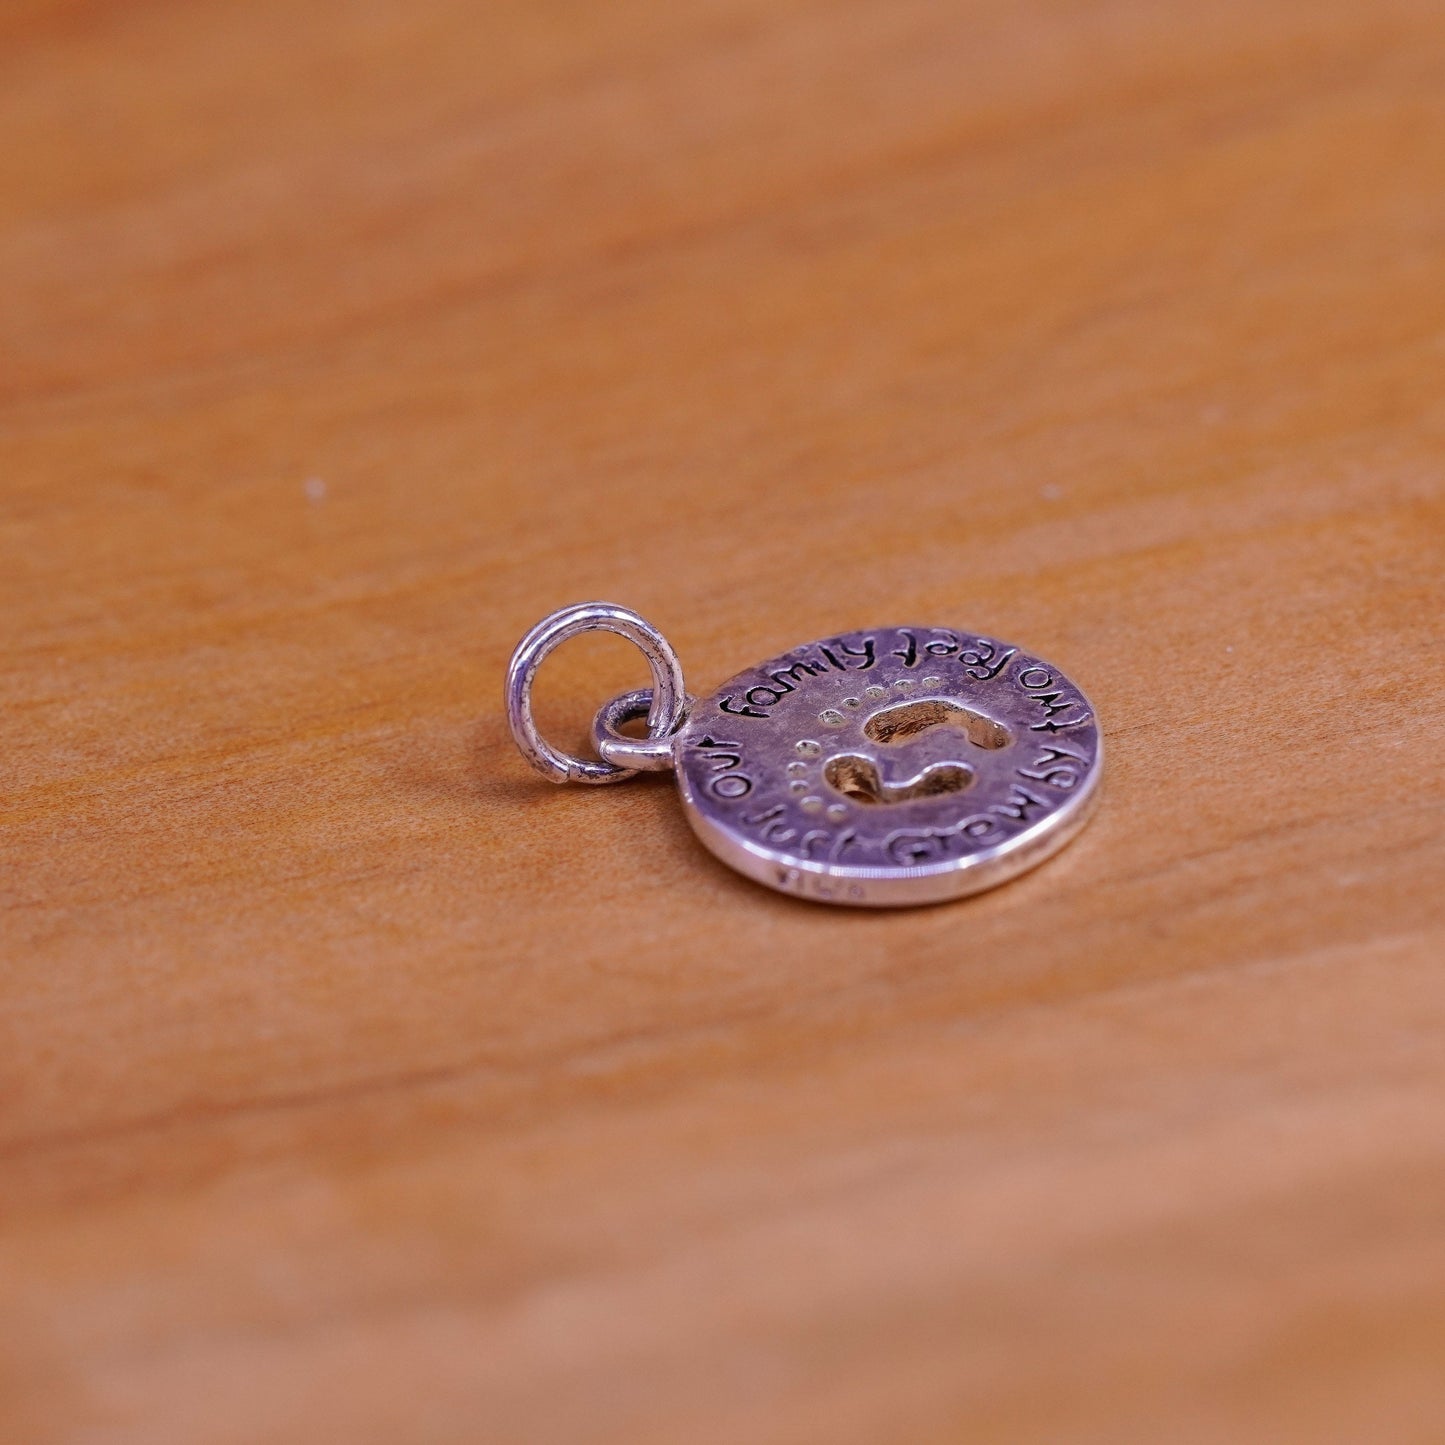 vtg Sterling silver handmade charm, 925 footprint pendant “our family just grew